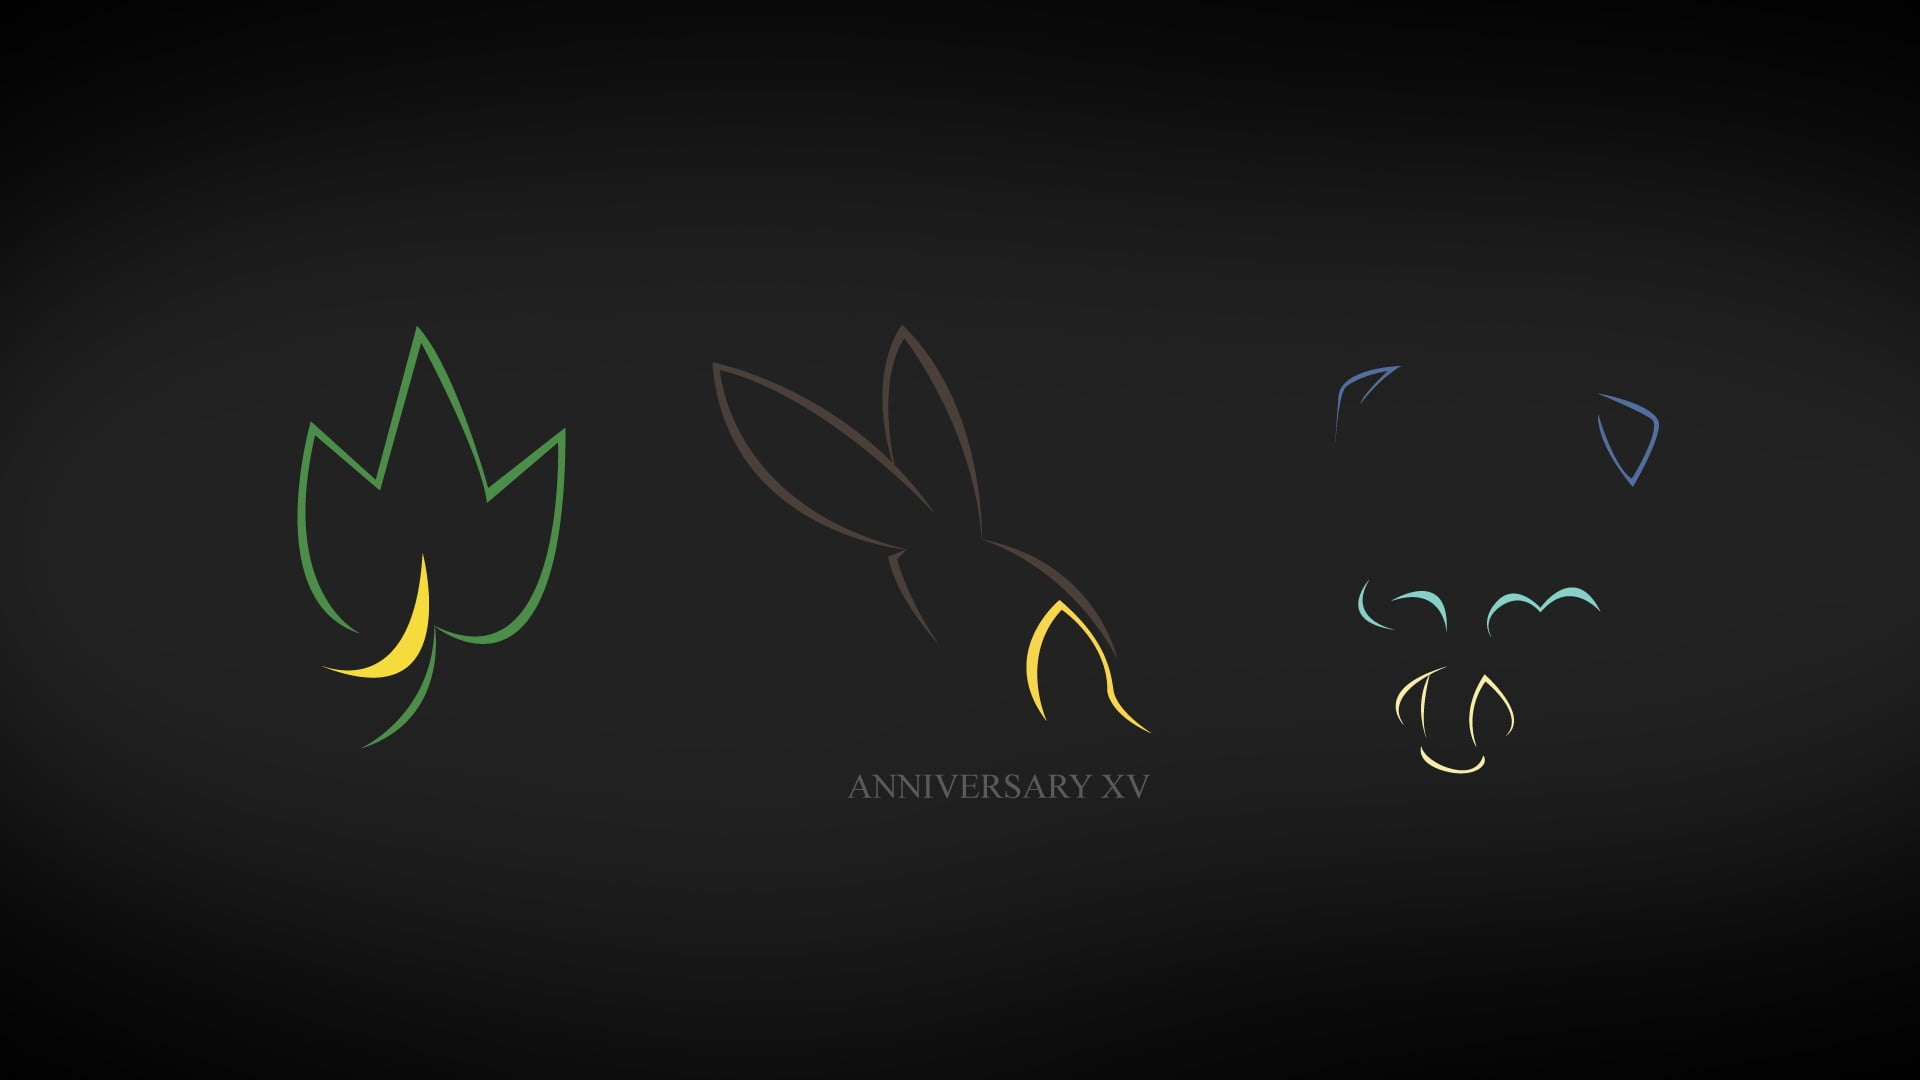 anniversary XV text, Pokémon, video games, minimalism, studio shot